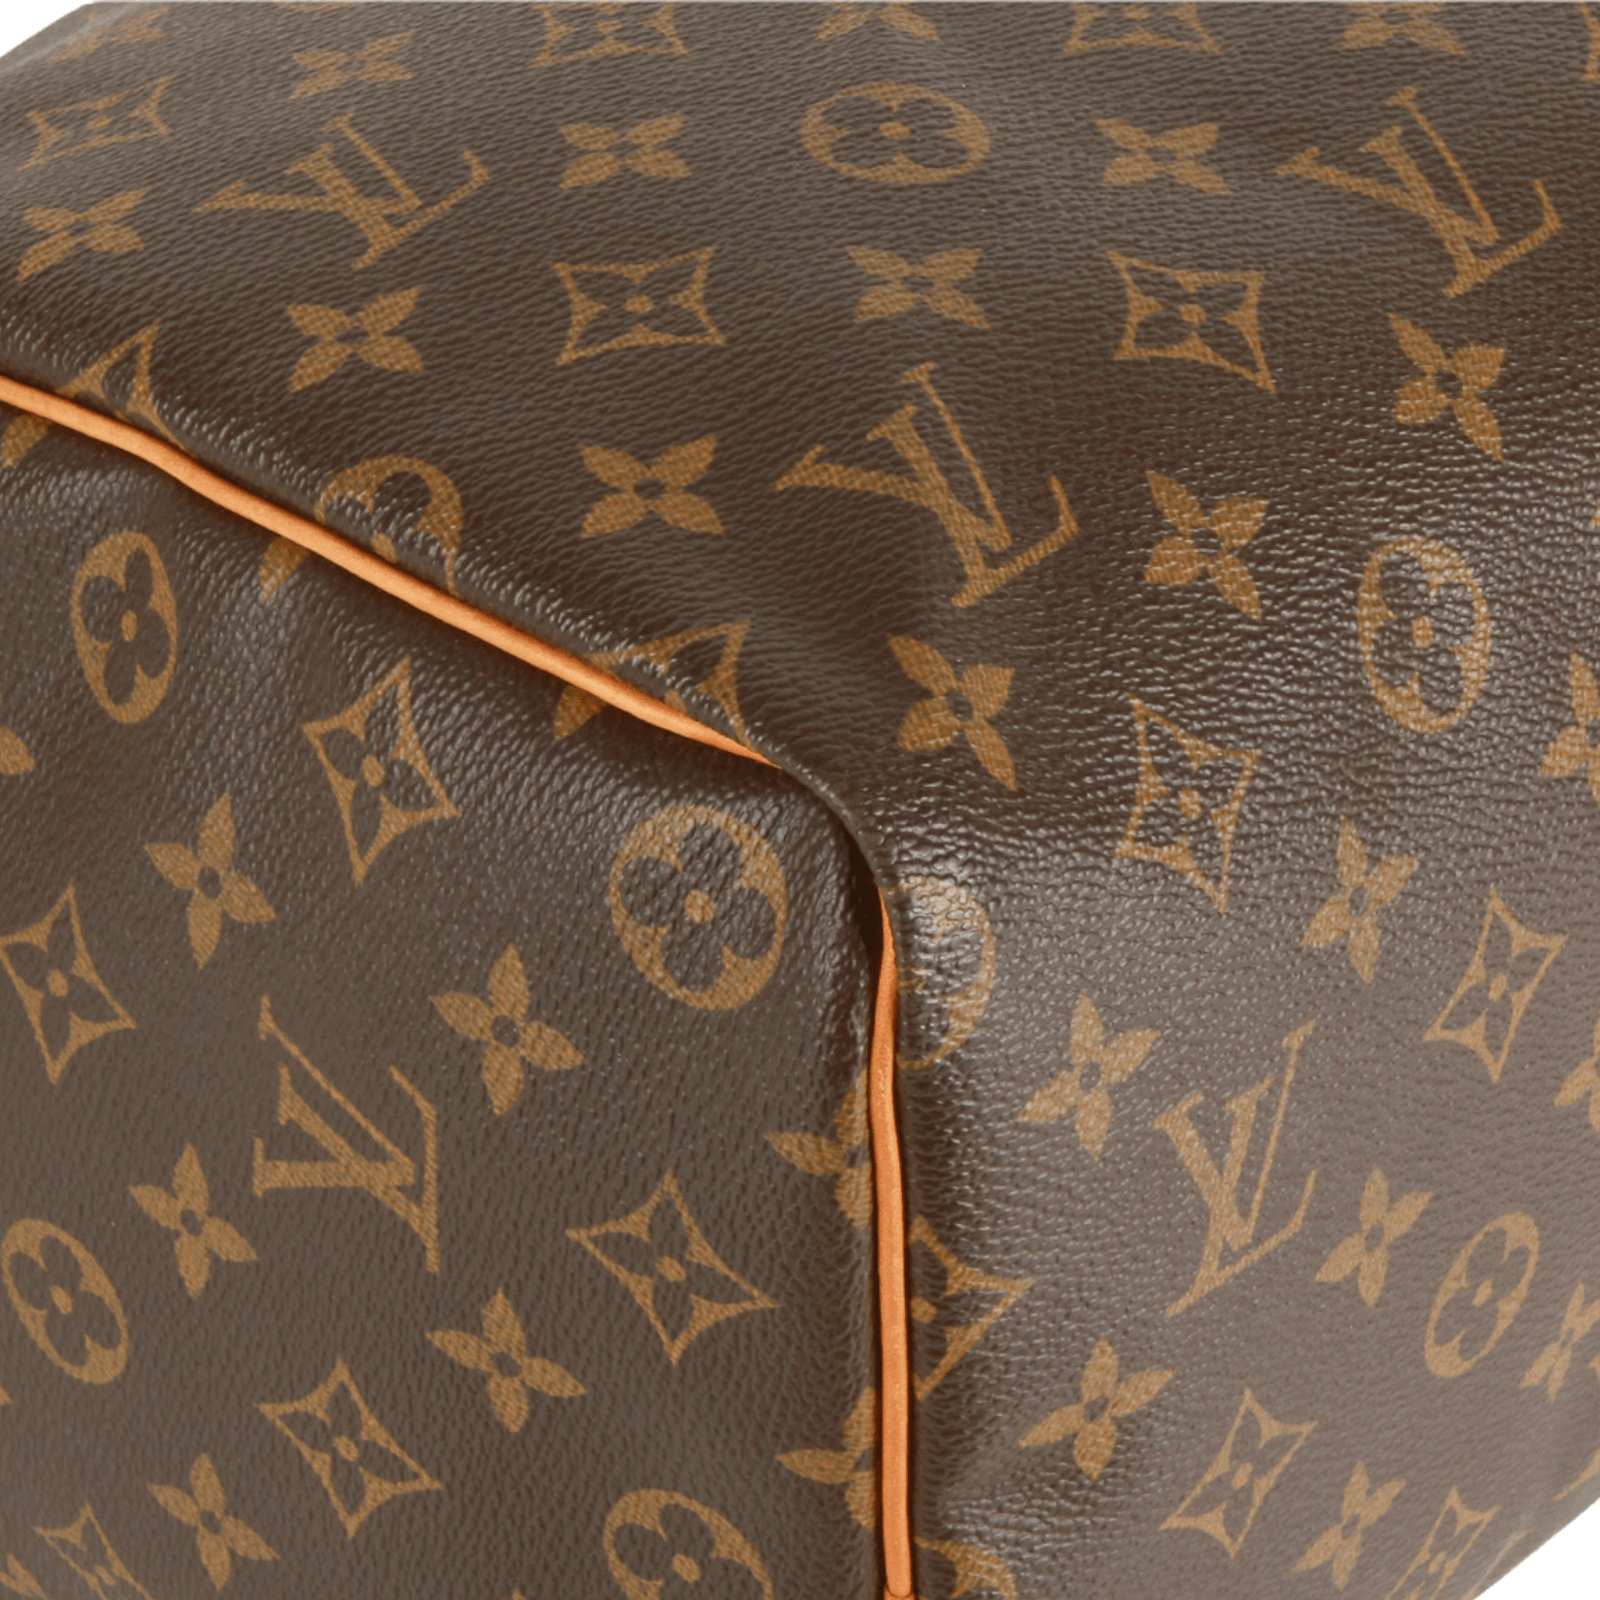 Auth. Louis Vuitton monogram speedy 40. ( A5 ) .